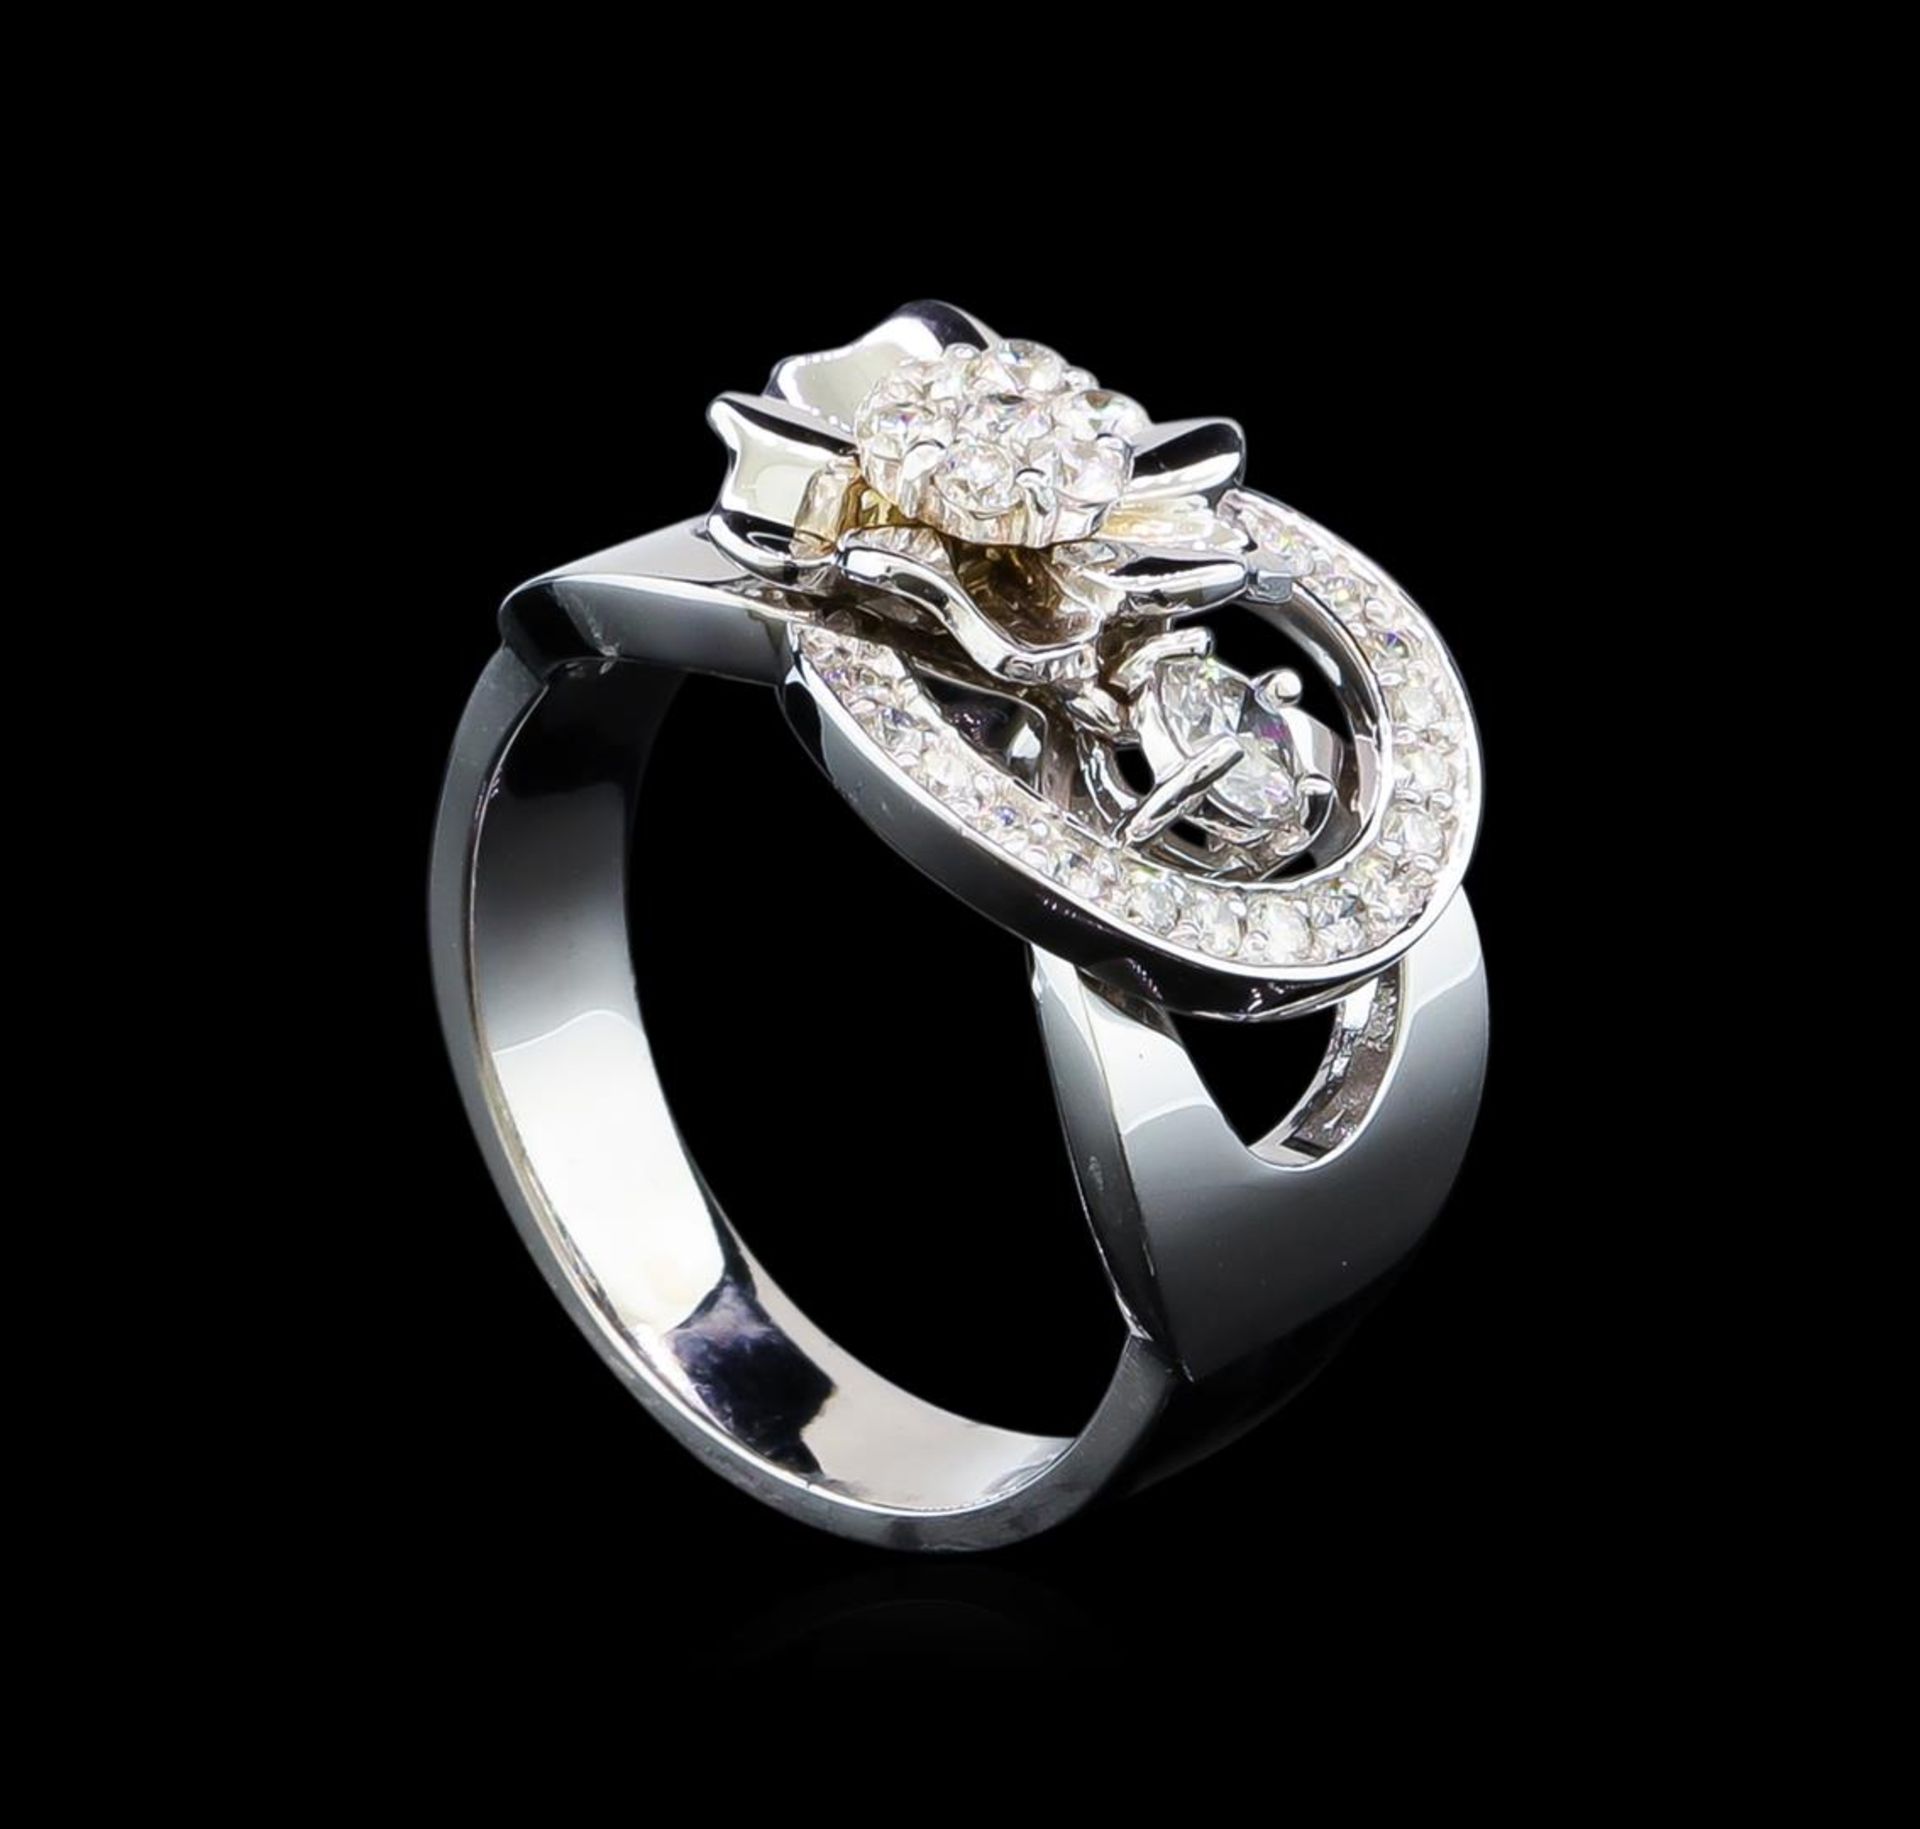 0.50 ctw Diamond Ring - 14KT White Gold - Image 4 of 4